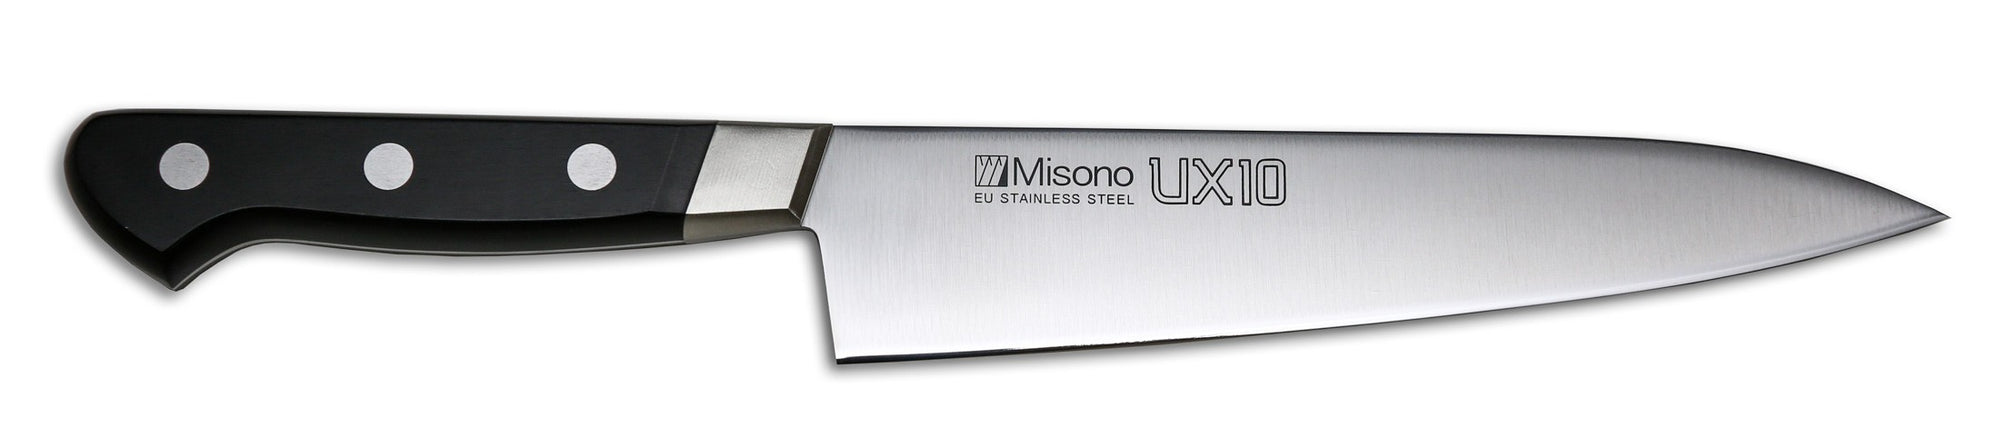 Misono UX10 Chef's Knife (Gyutou), 7.1-inch (180mm) - # 711